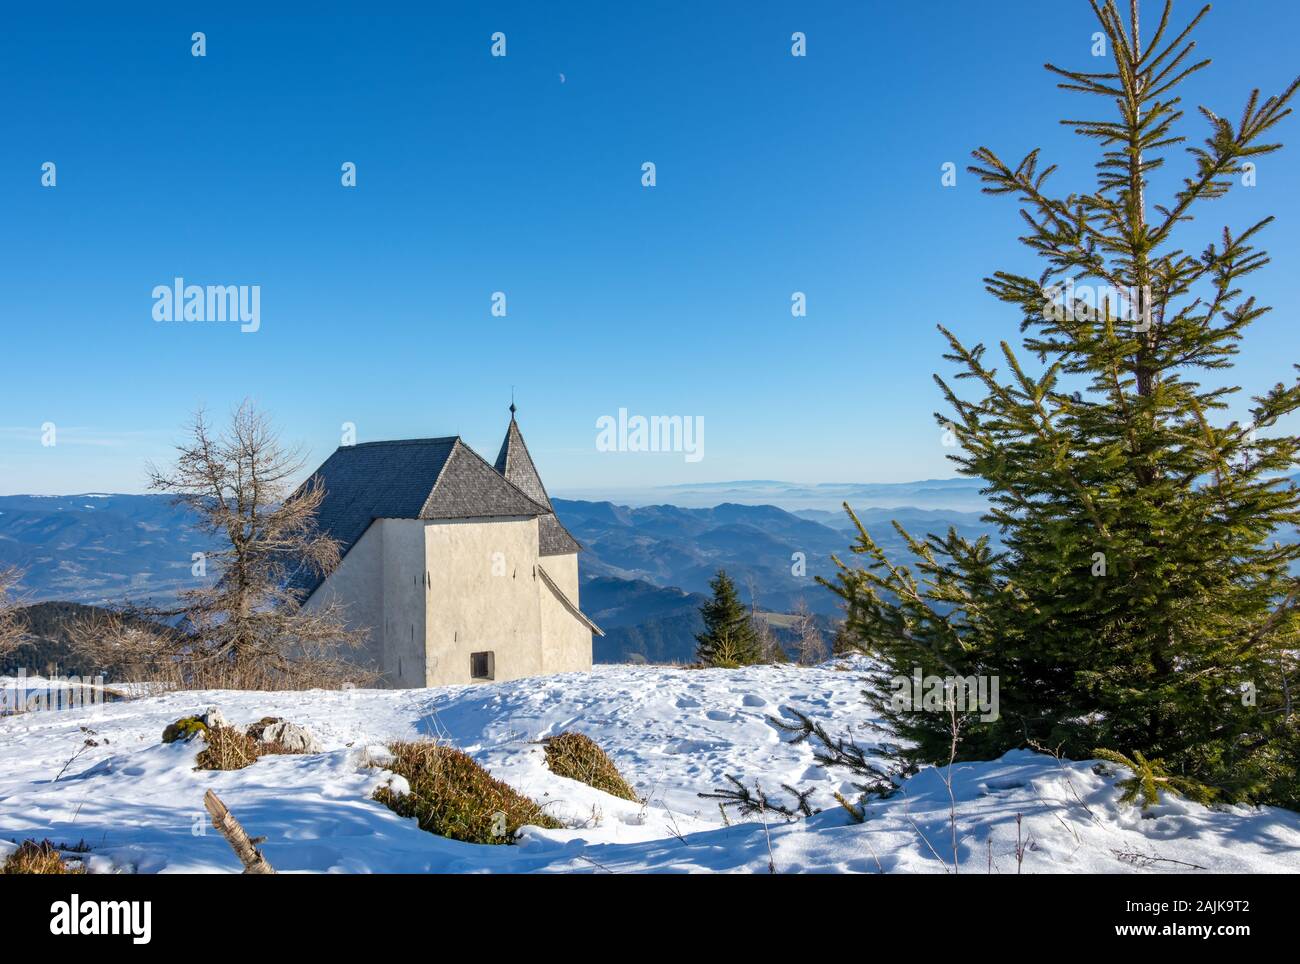 Uršlja gora, Slovenia - January 2, 2020;  Peak Uršlja gora in Slovenia with church St. Uršula. A lonely peak in the heart of Koroška region. Stock Photo